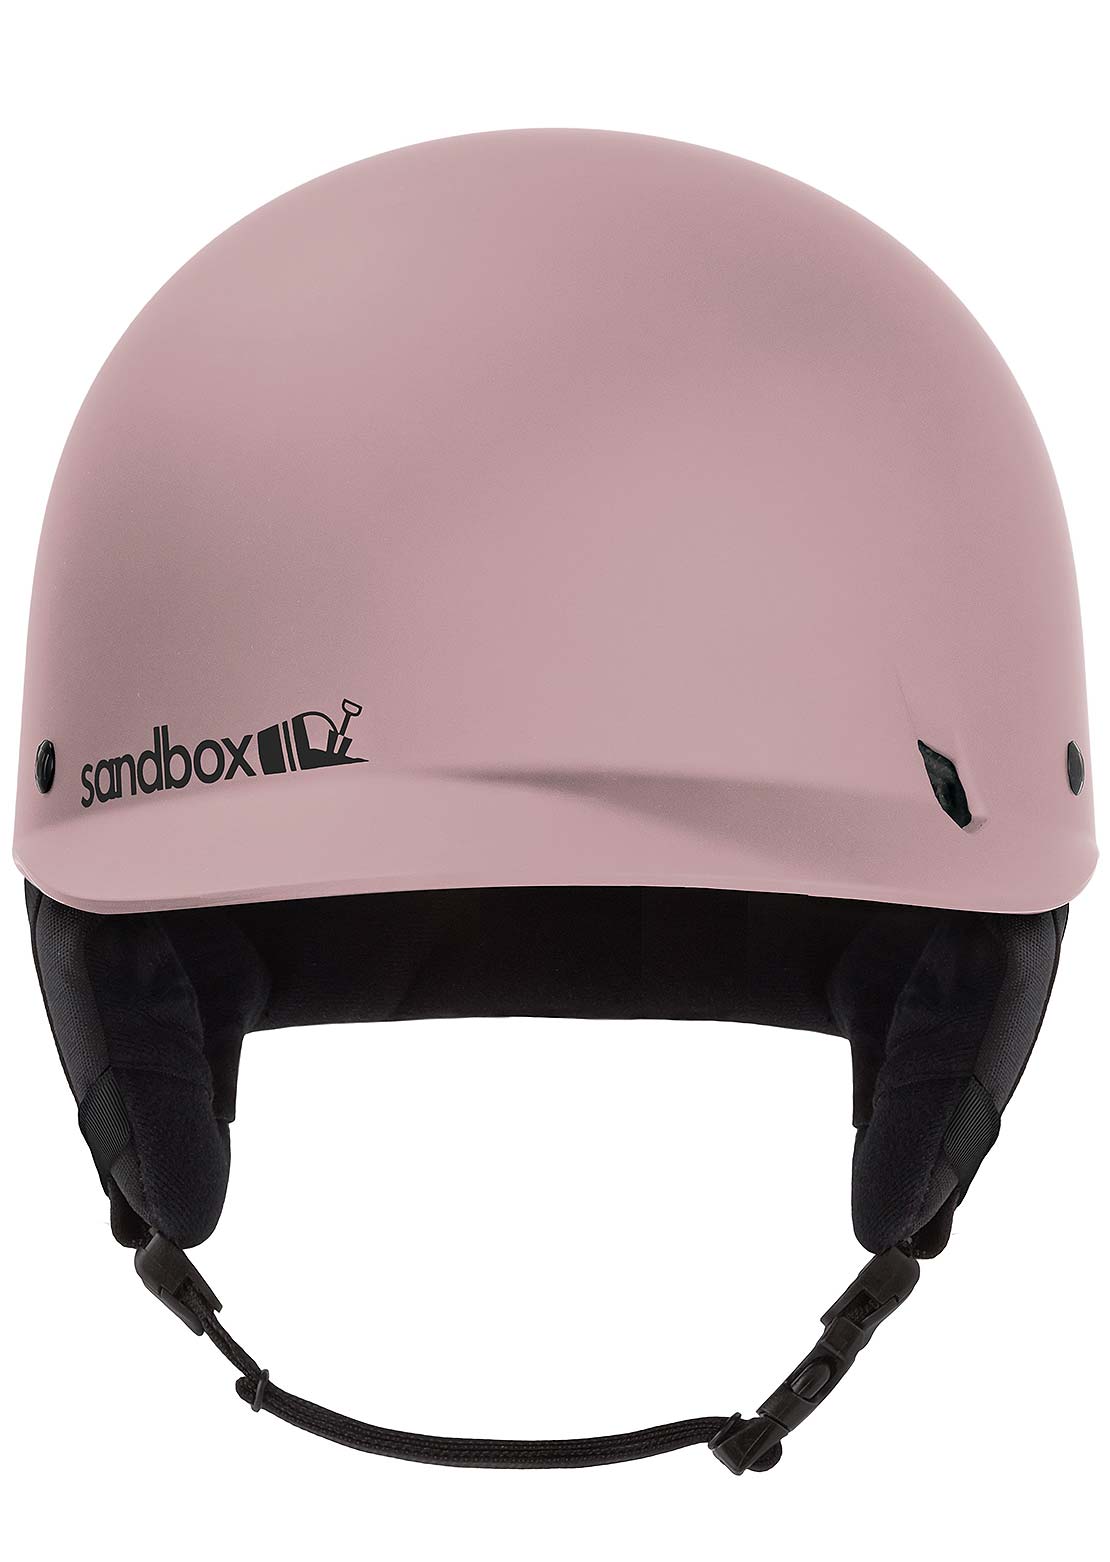 Sandbox Classic 2.0 Snow MIPS Winter Helmet Dusty Pink